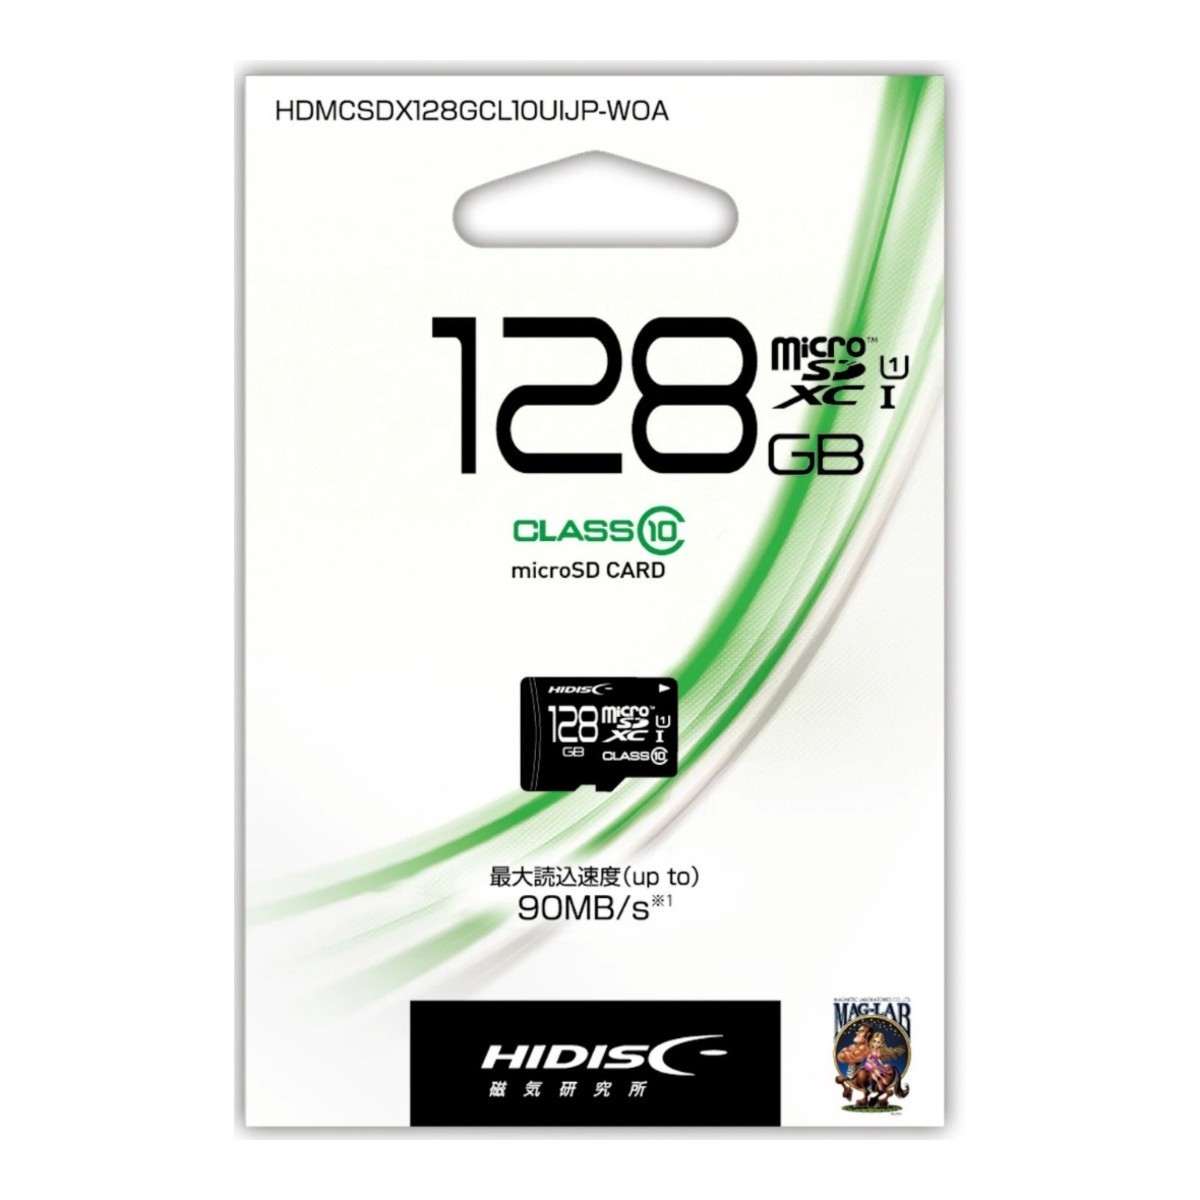 microSDXC128GB карта памяти (HI-DISC)HDMCSDX128GCLIOUIJP-WOA [1 иен старт лот * новый товар * бесплатная доставка ]